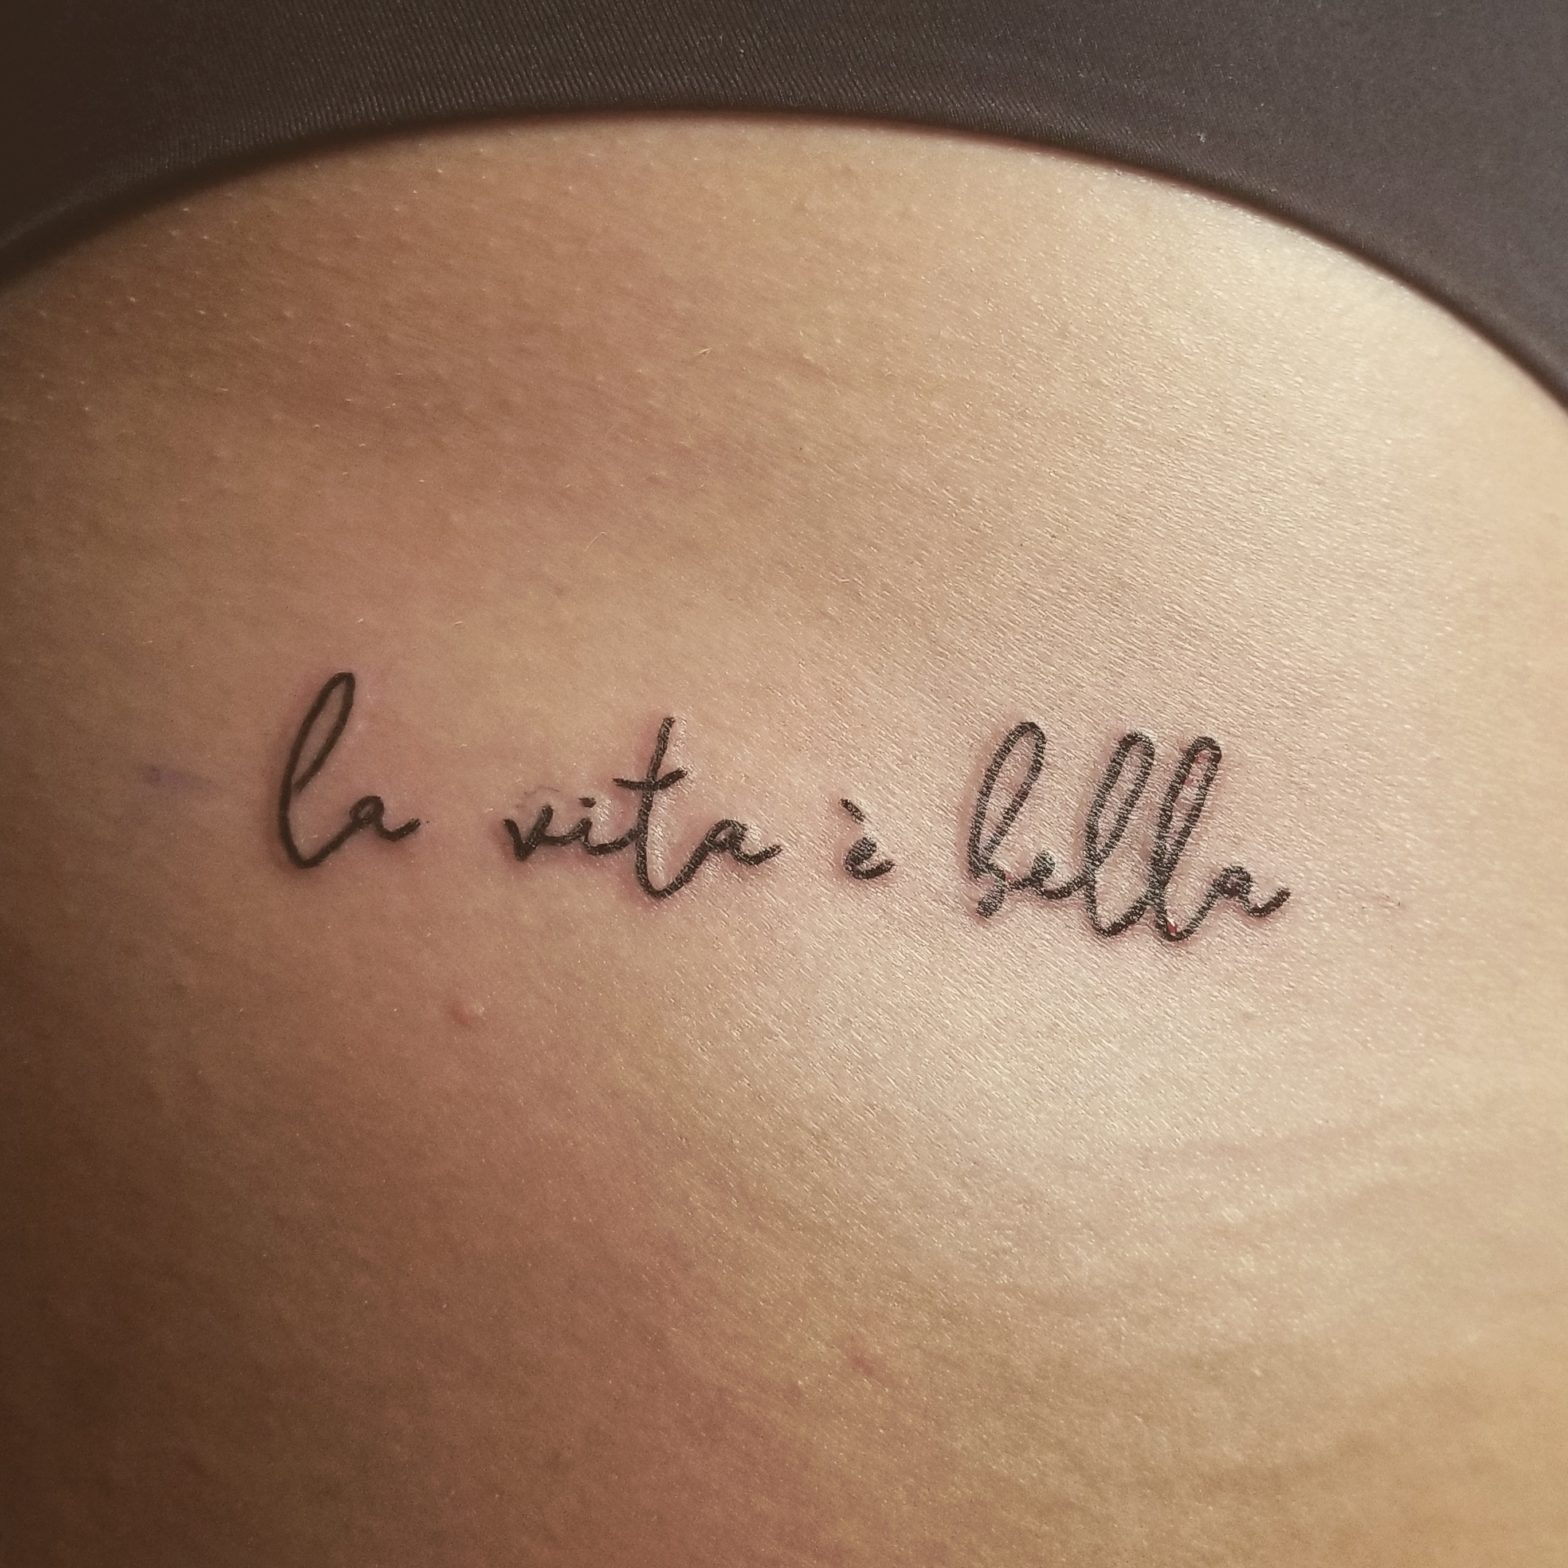 Get the Italian saying la vita e bella tattoo for you